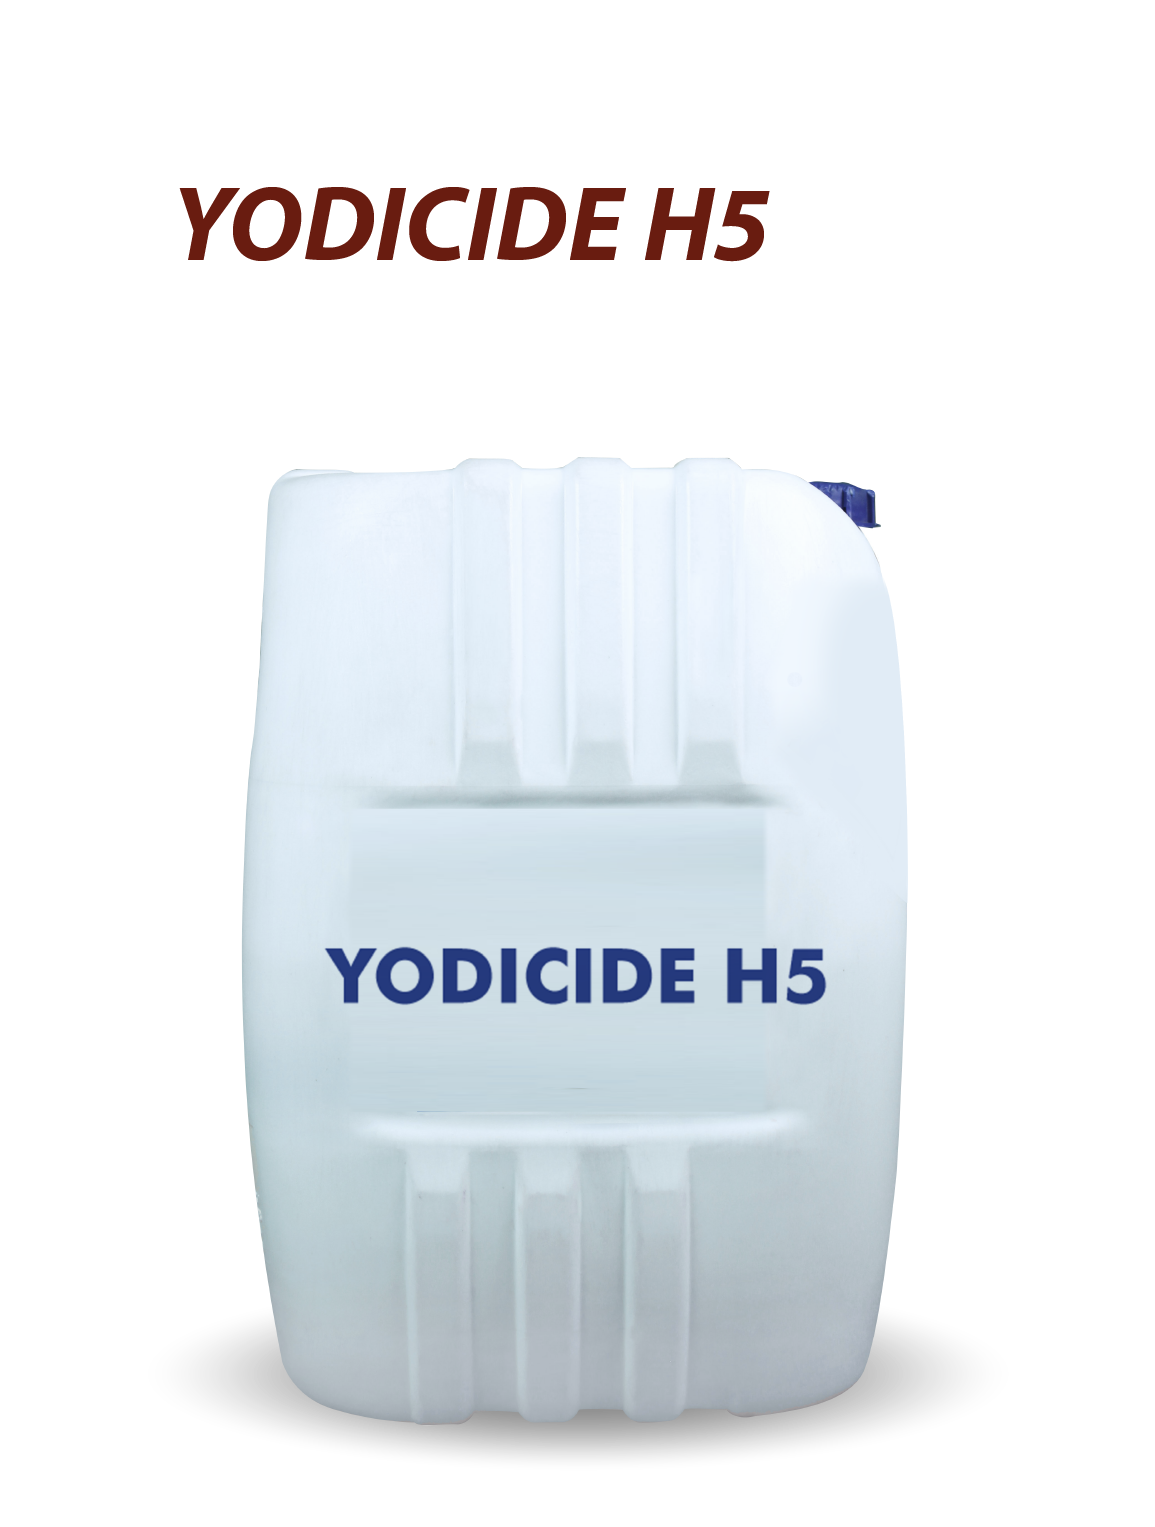 YODICIDE H5